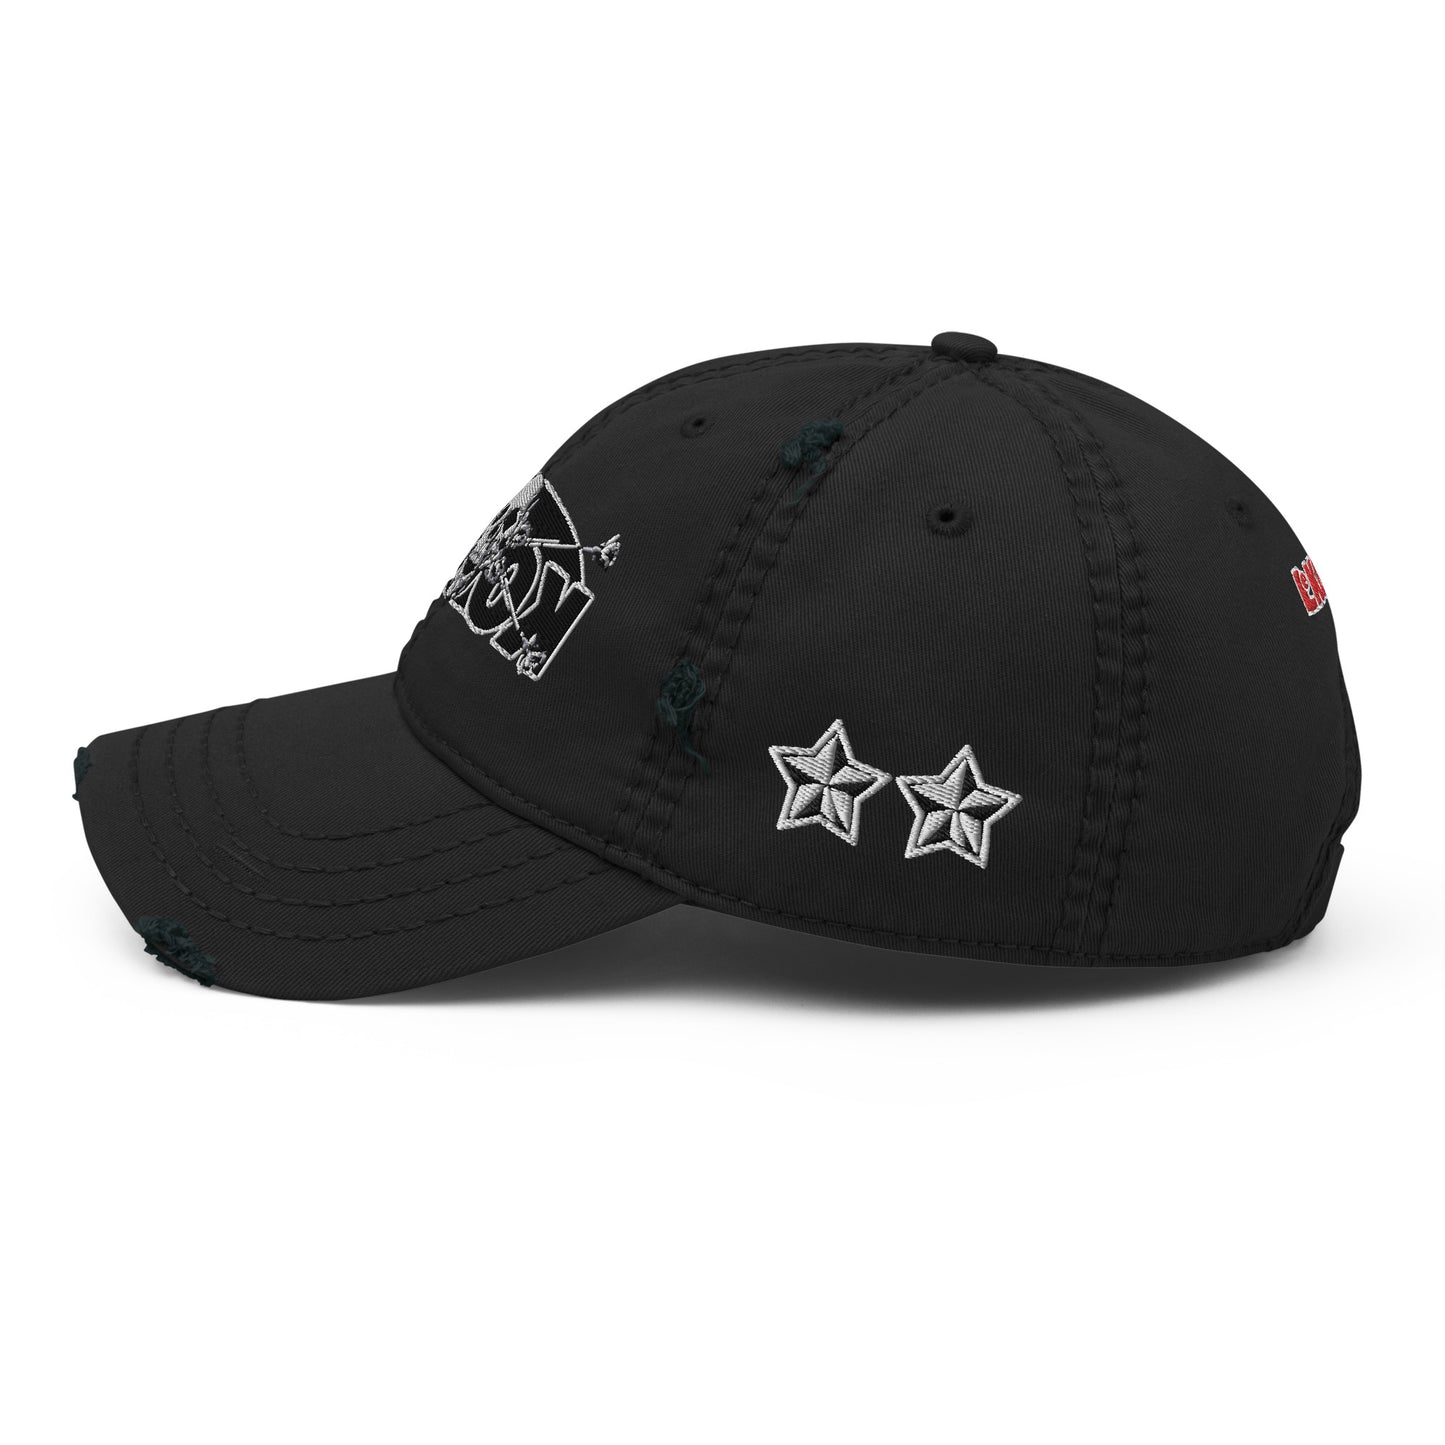 BLACK SKULL WORN CAP